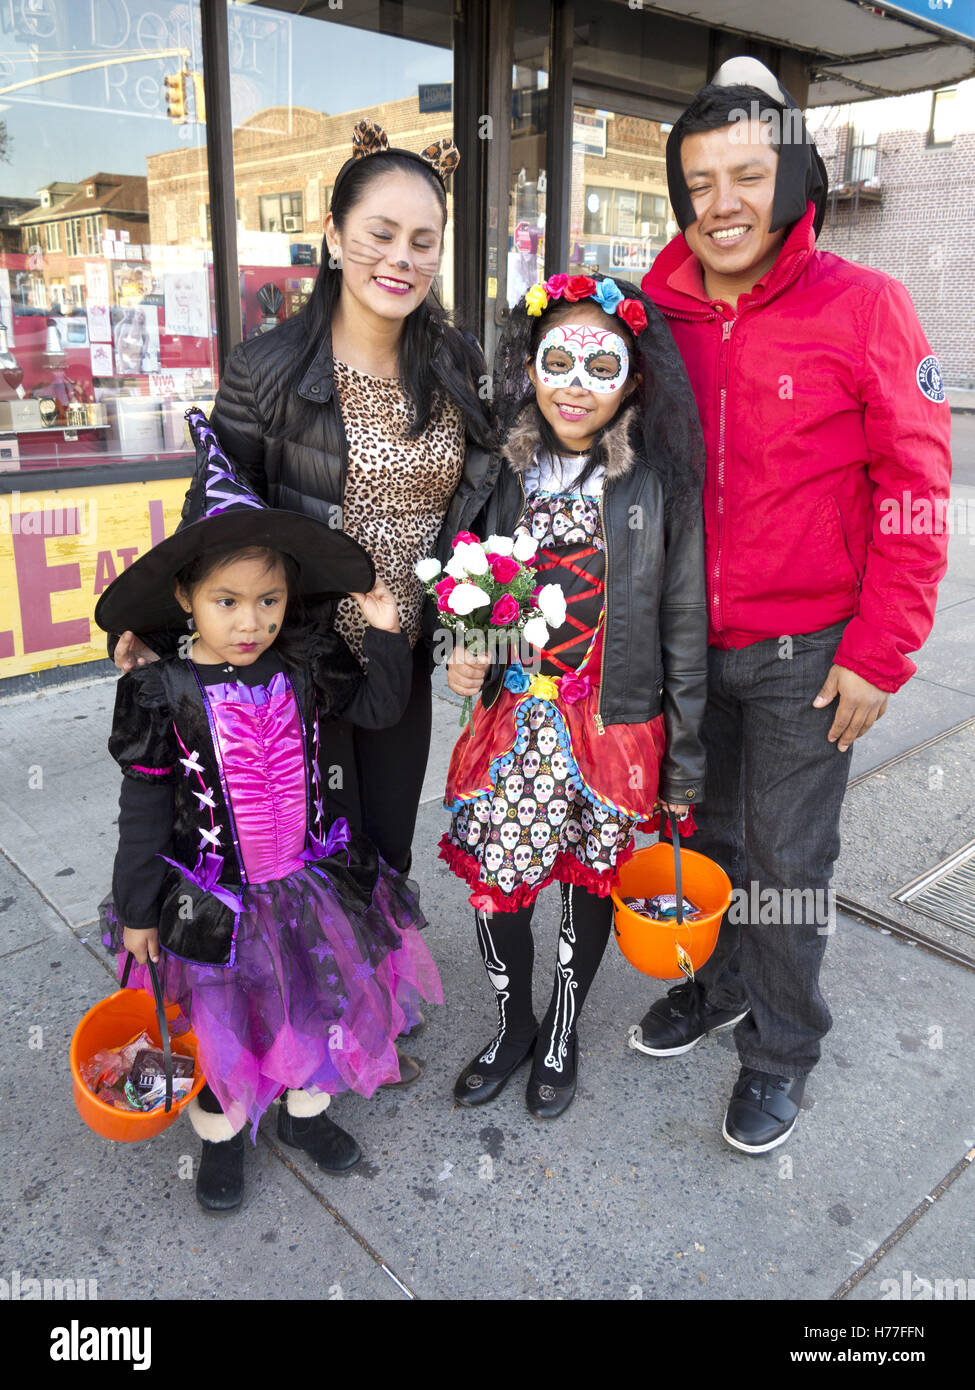 Mexikanische Familie feiert Halloween in Bensonhurst Abschnitt von Brooklyn, New York, 2016. Stockfoto